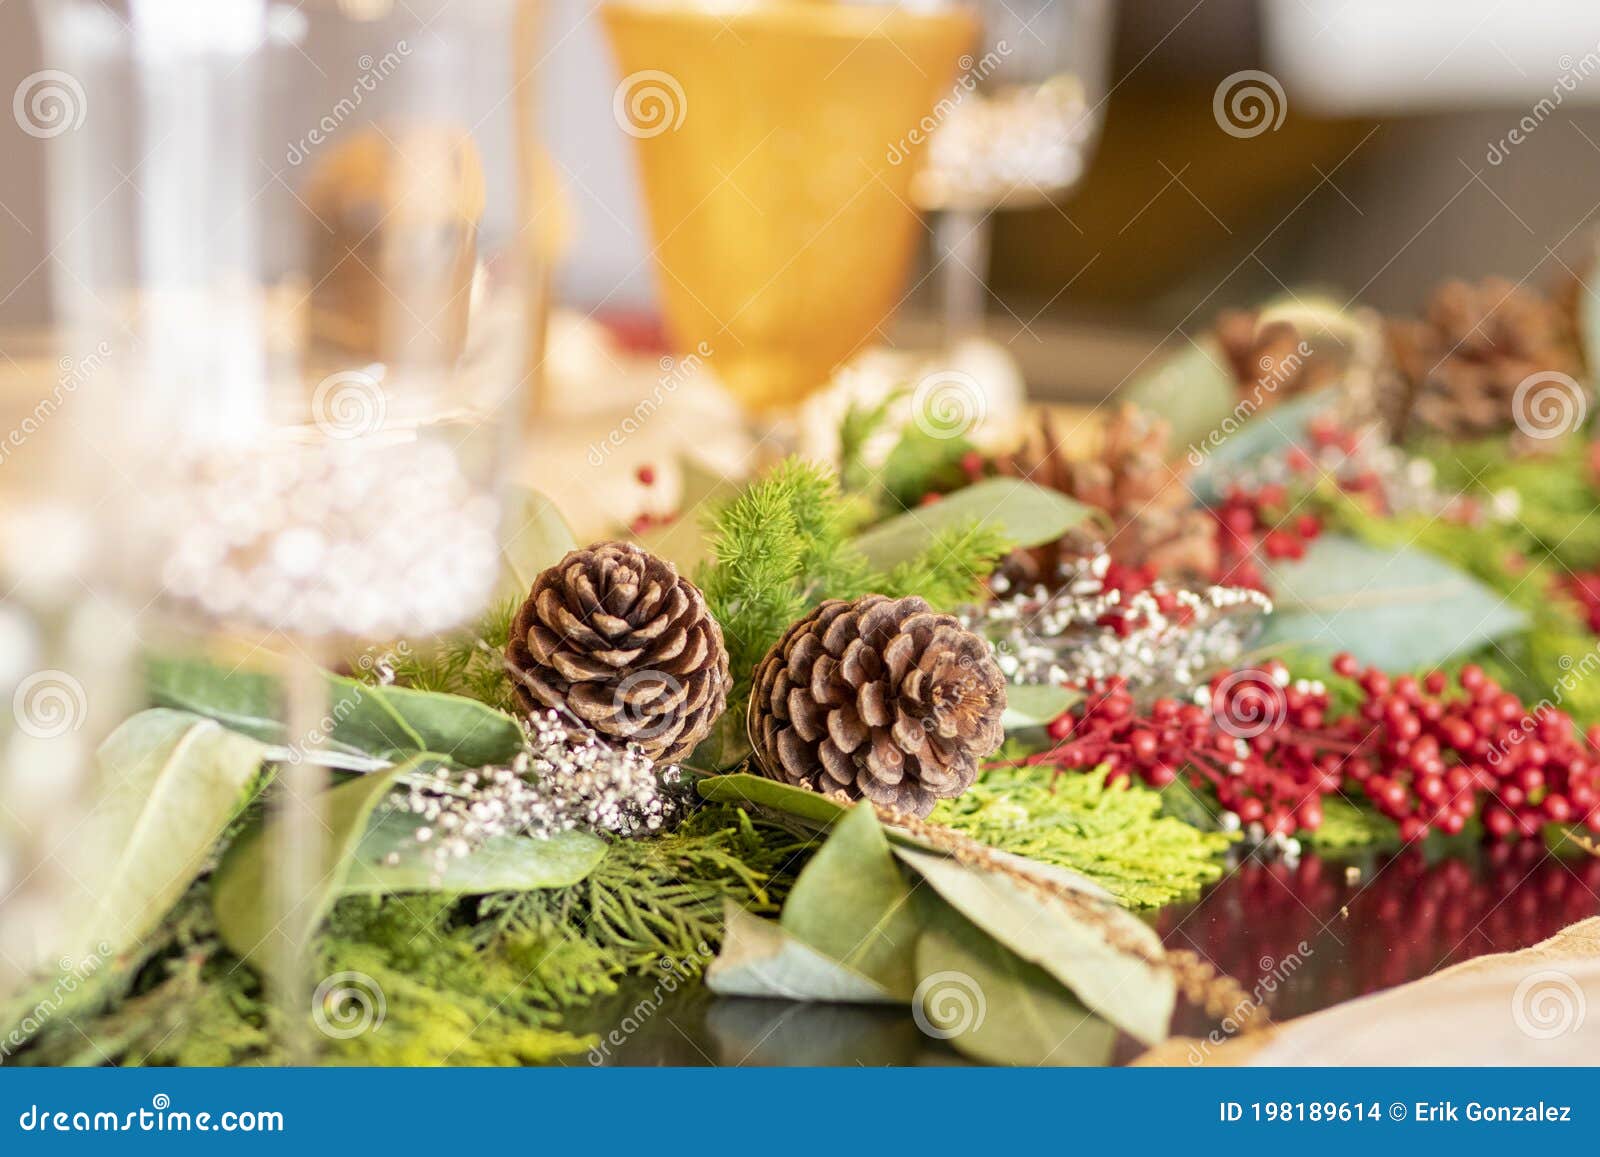 Elegant Table Set for Christmas Dinner Stock Photo - Image of gathering ...